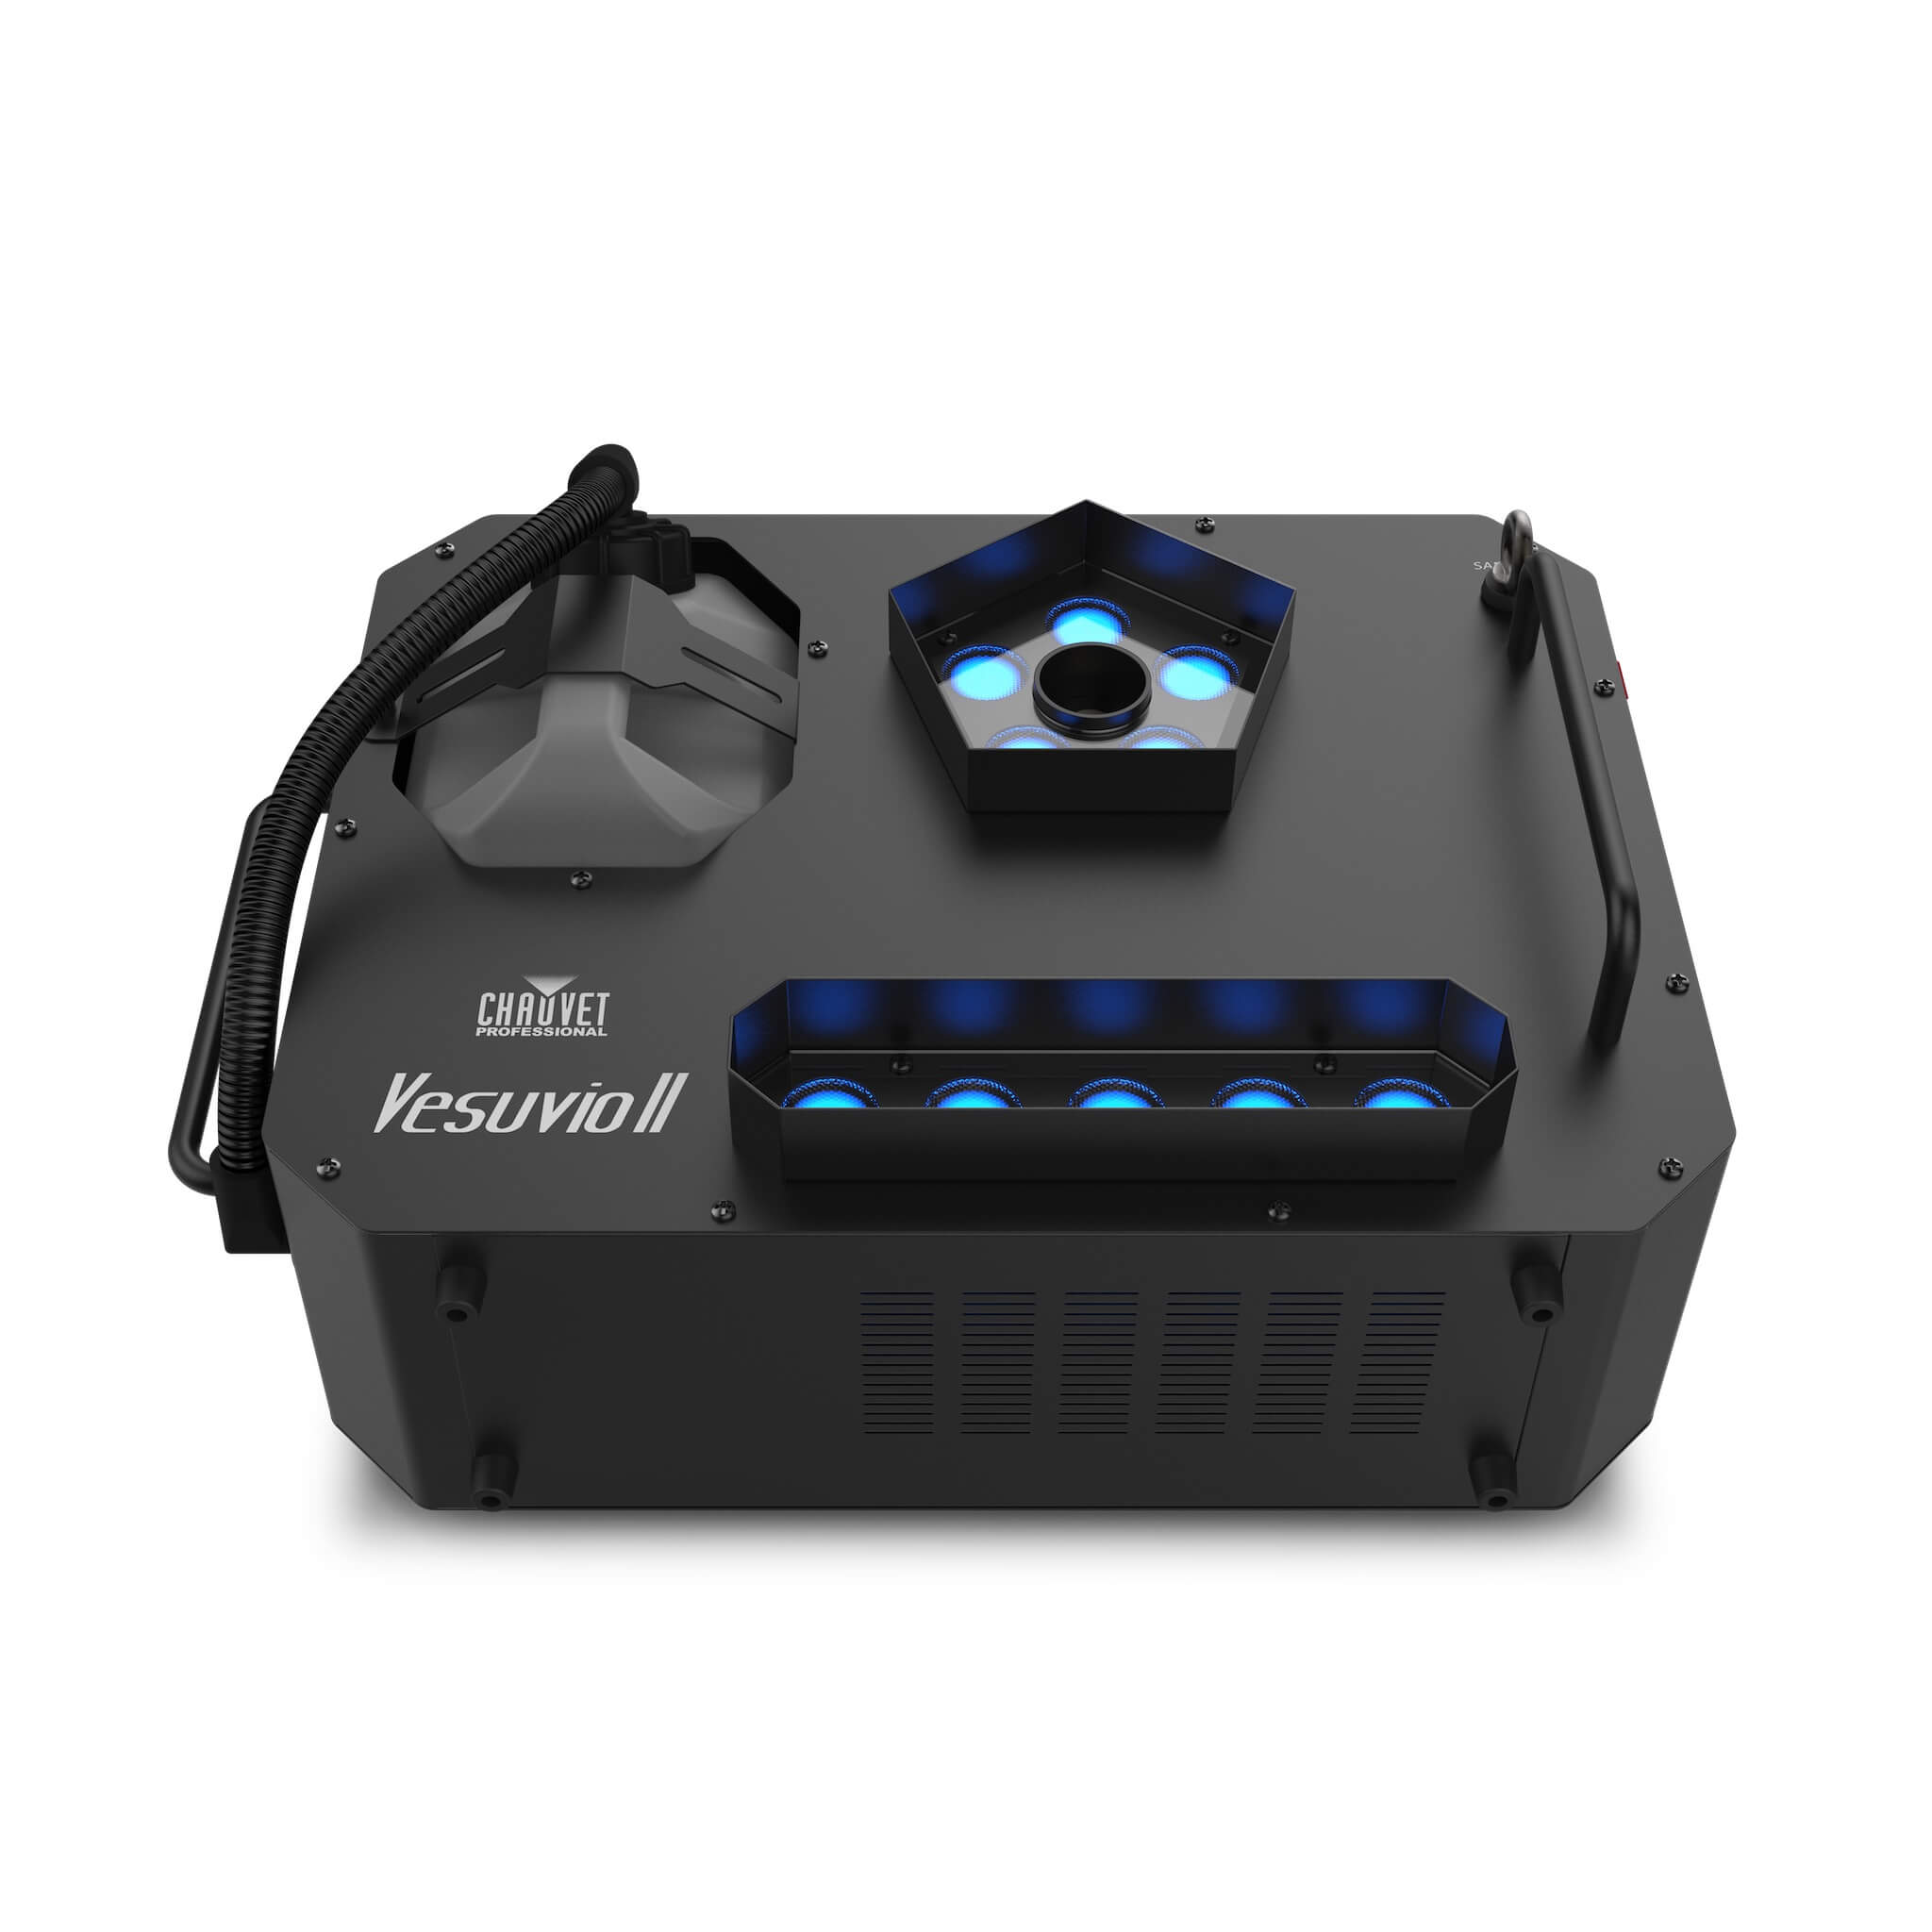 Chauvet Professional Vesuvio II - RGBA+UV LED Water Based Fog Machine, top